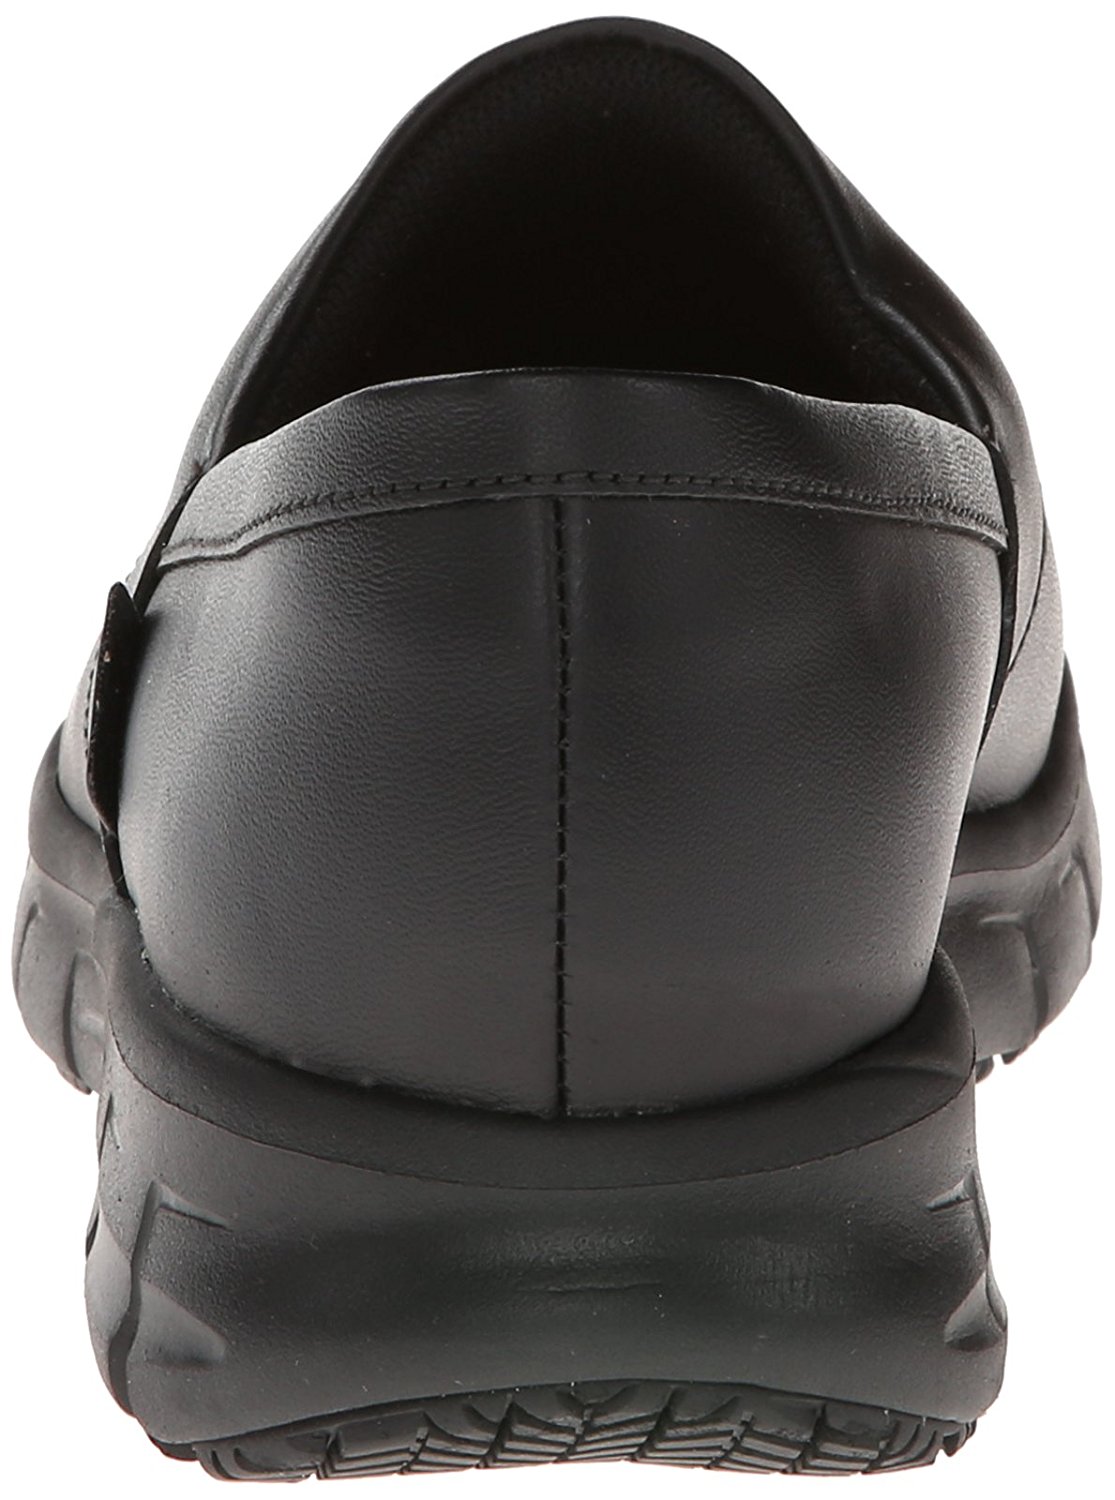 Skechers Womens cozard SR Fabric Low Top Slip On Walking Shoes, Black ...